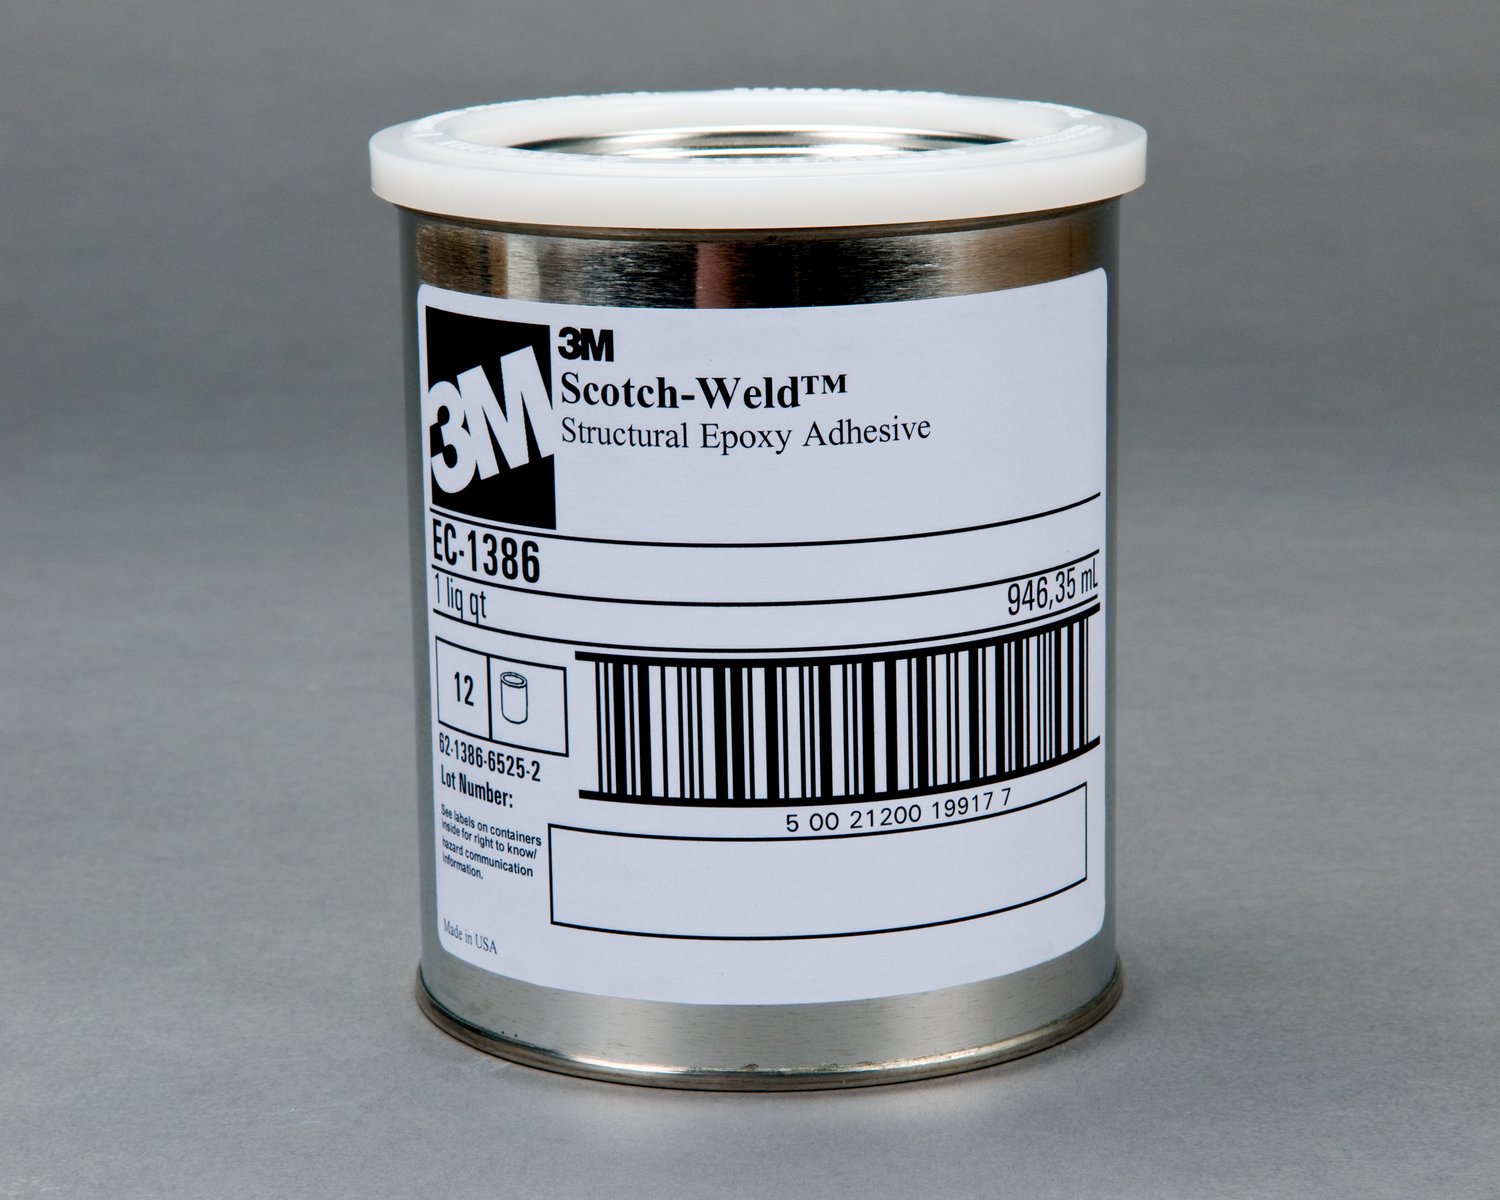 7000046326 - 3M Scotch-Weld Epoxy Adhesive 1386, Cream, 1 Quart, 12 Can/Case